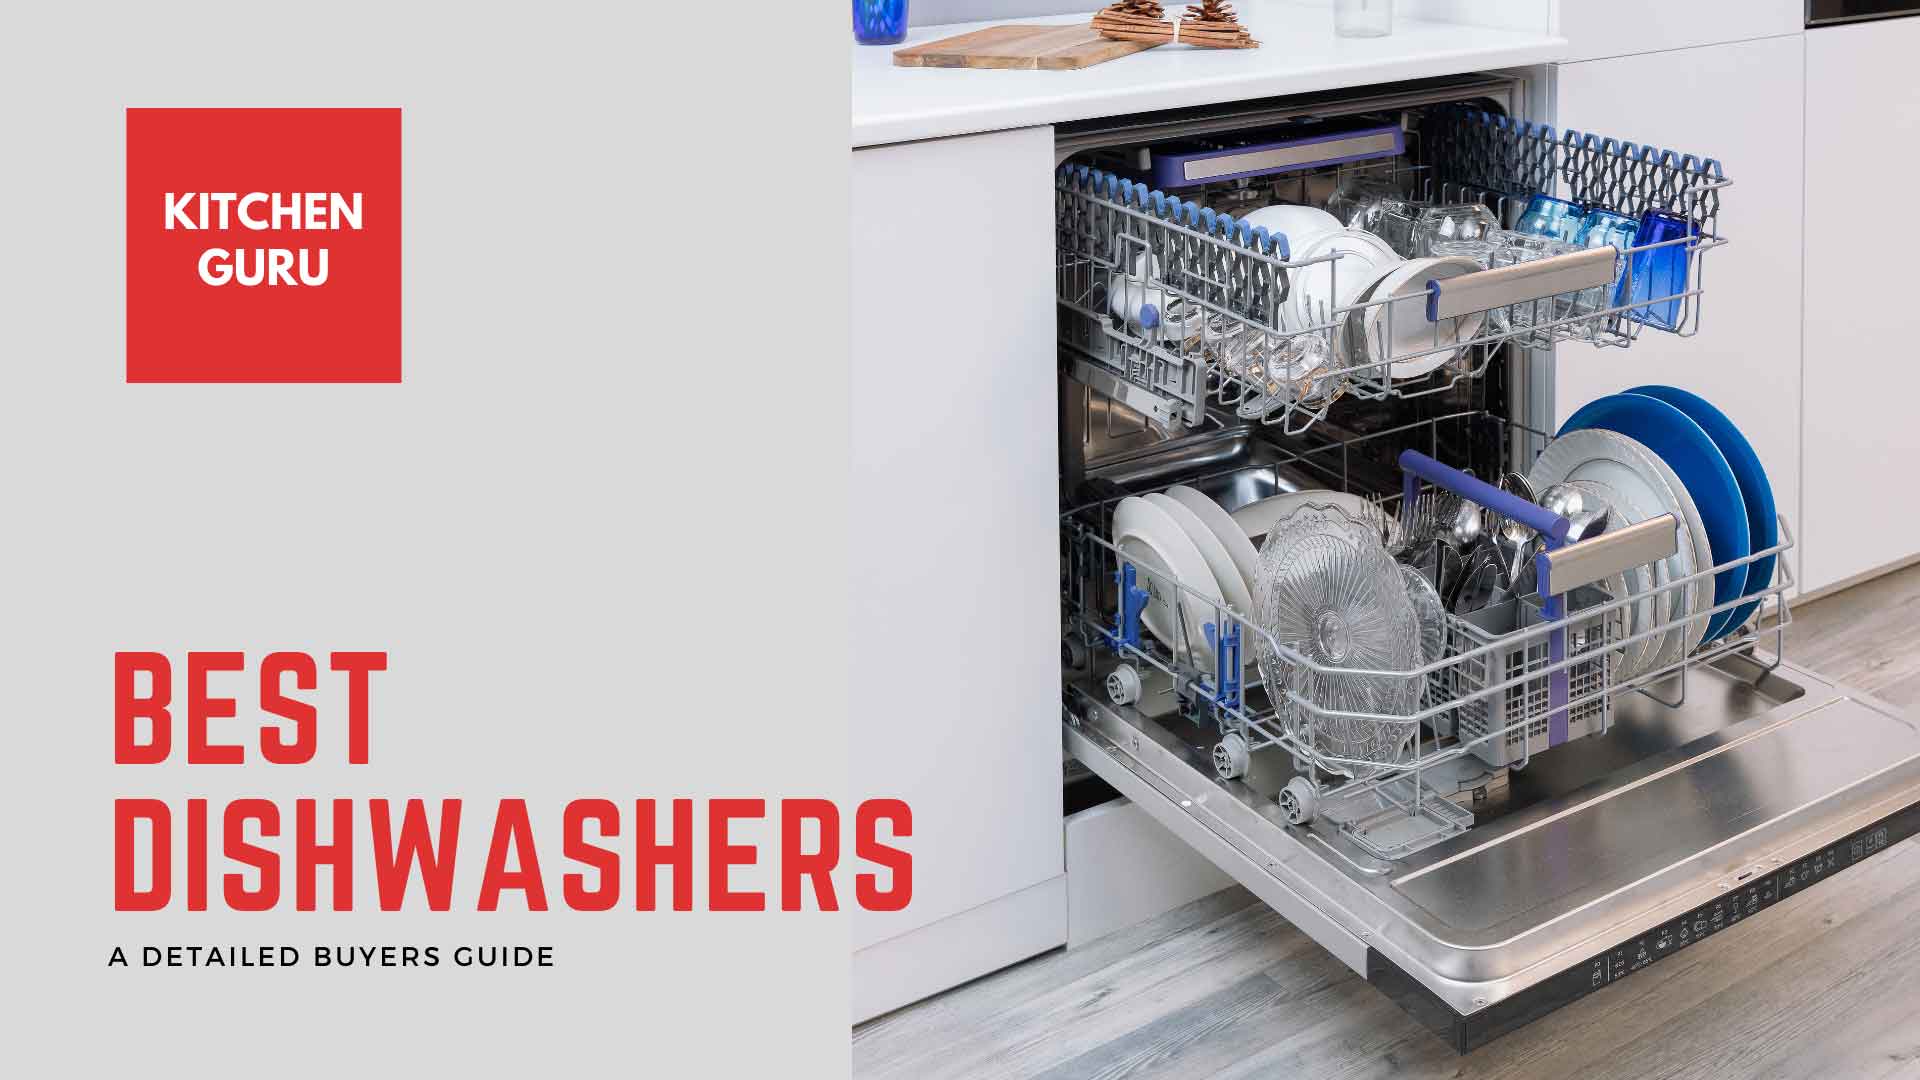 Best-Dishwasher-In-India